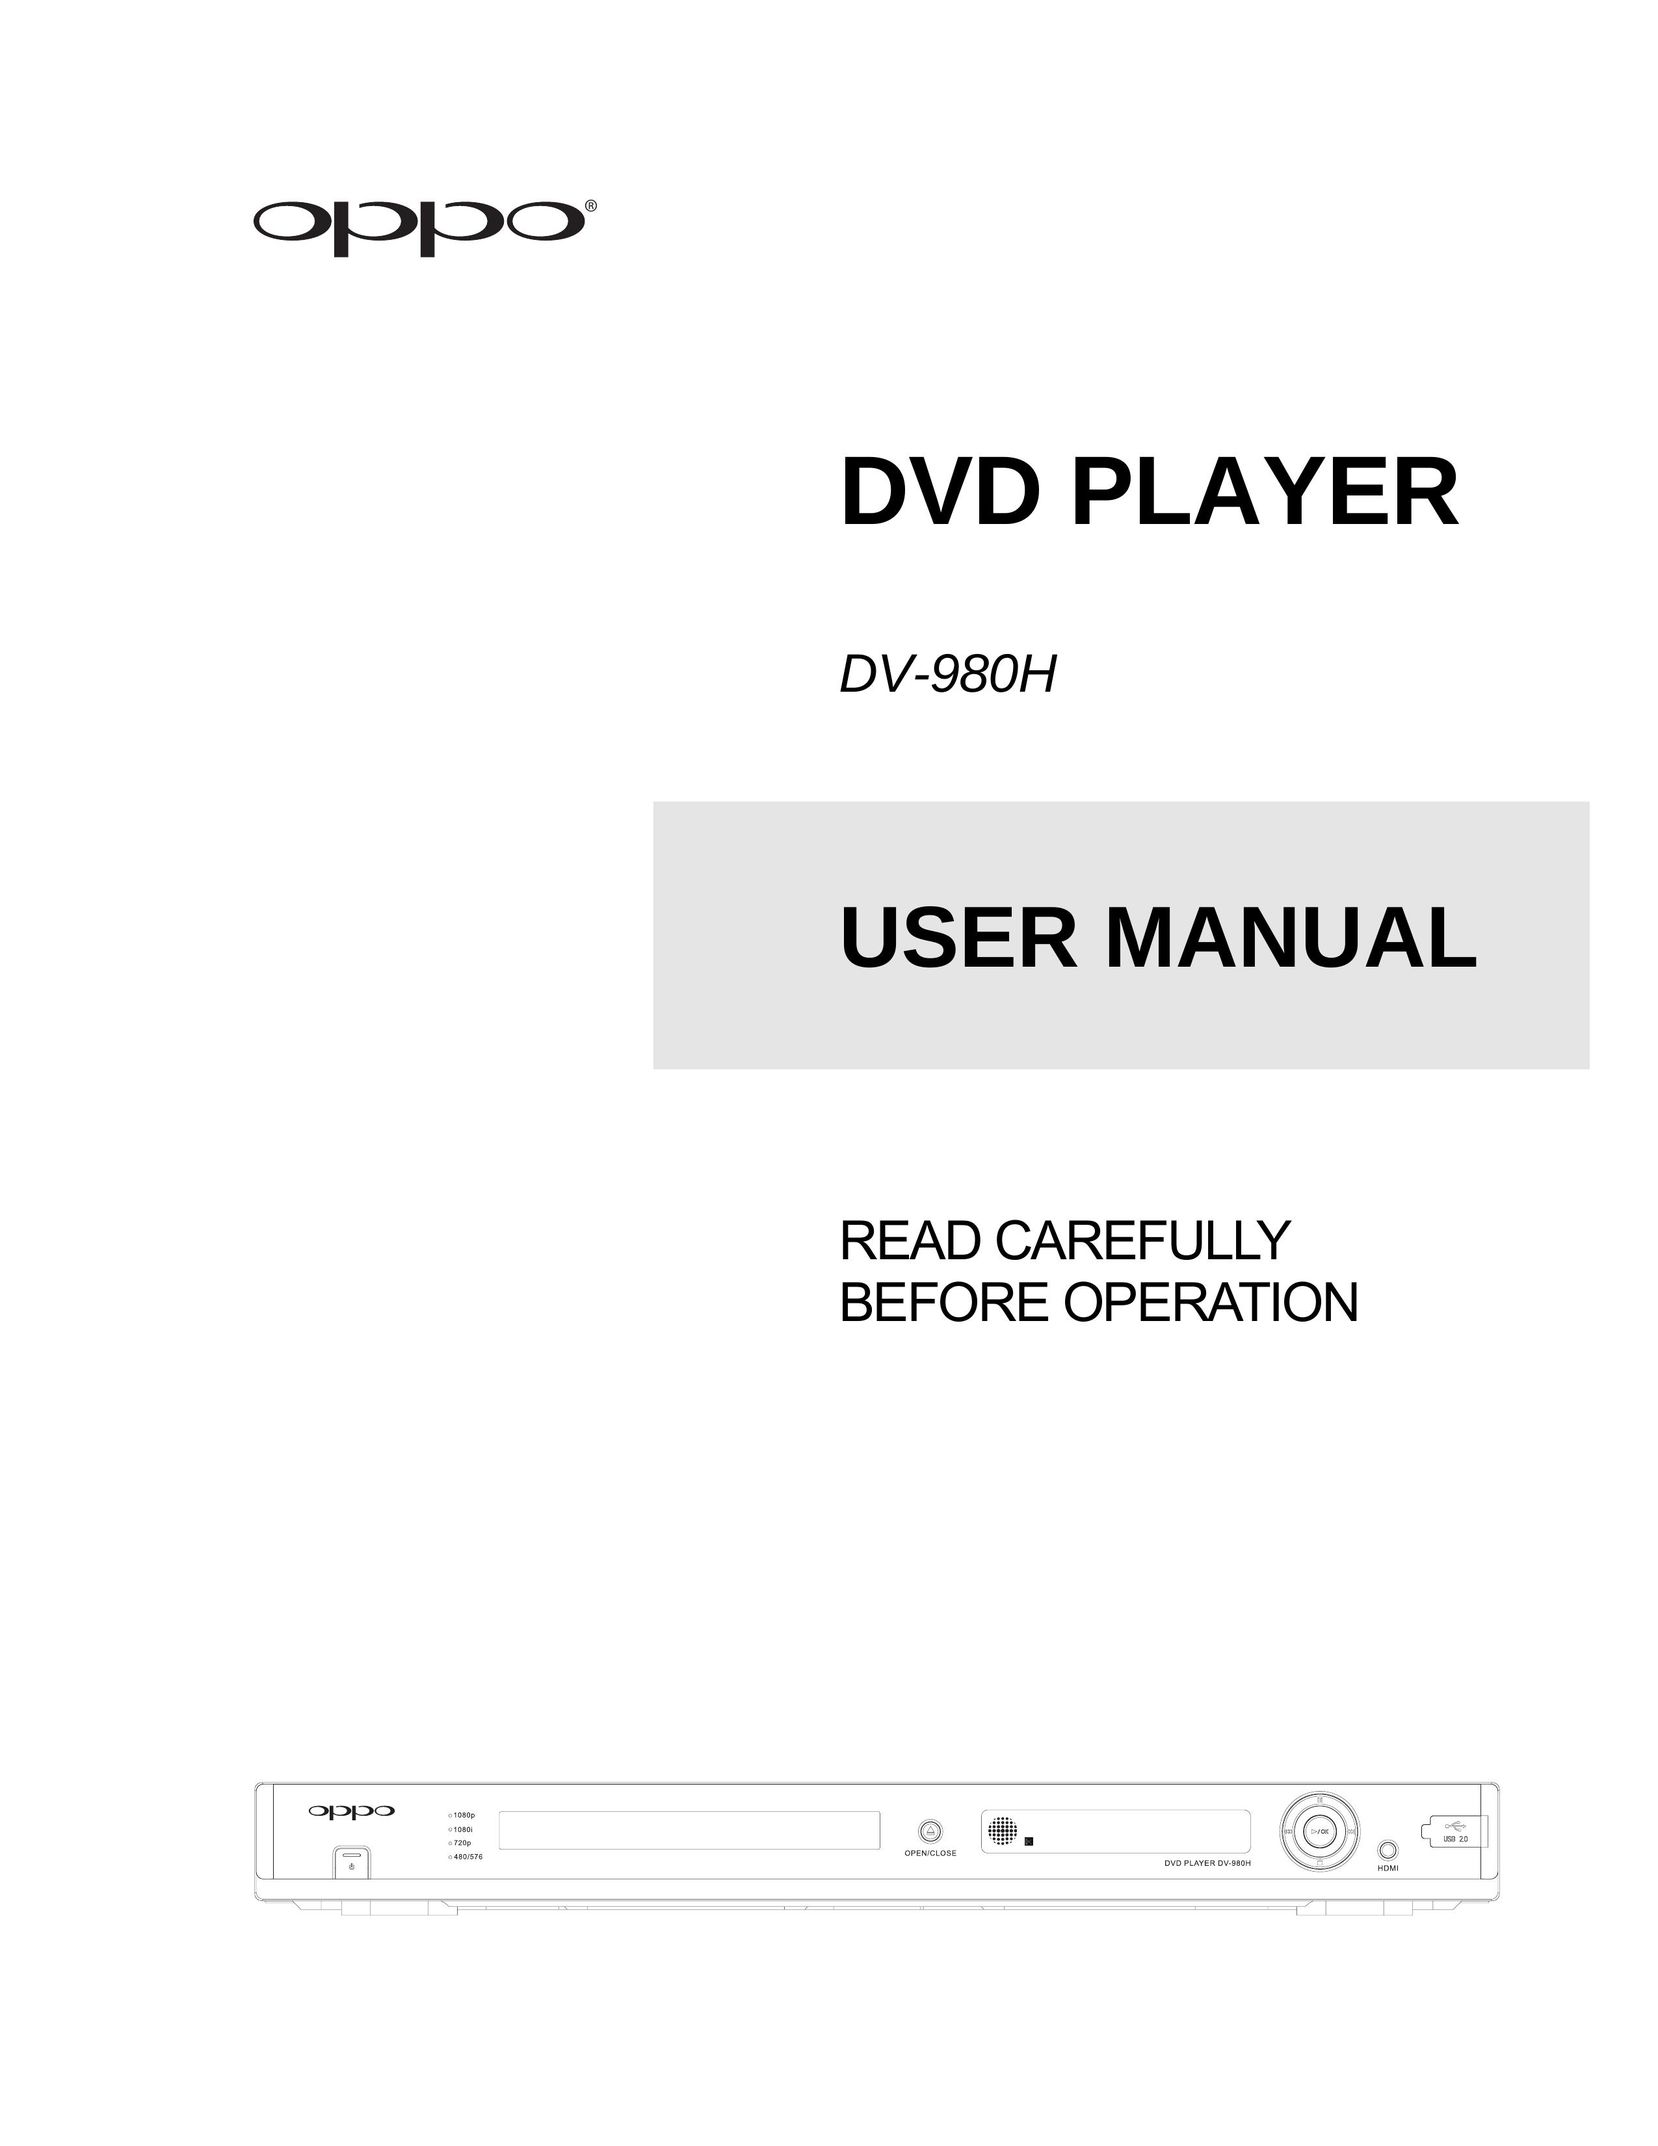 OPPO Digital DV-980H DVD Player User Manual